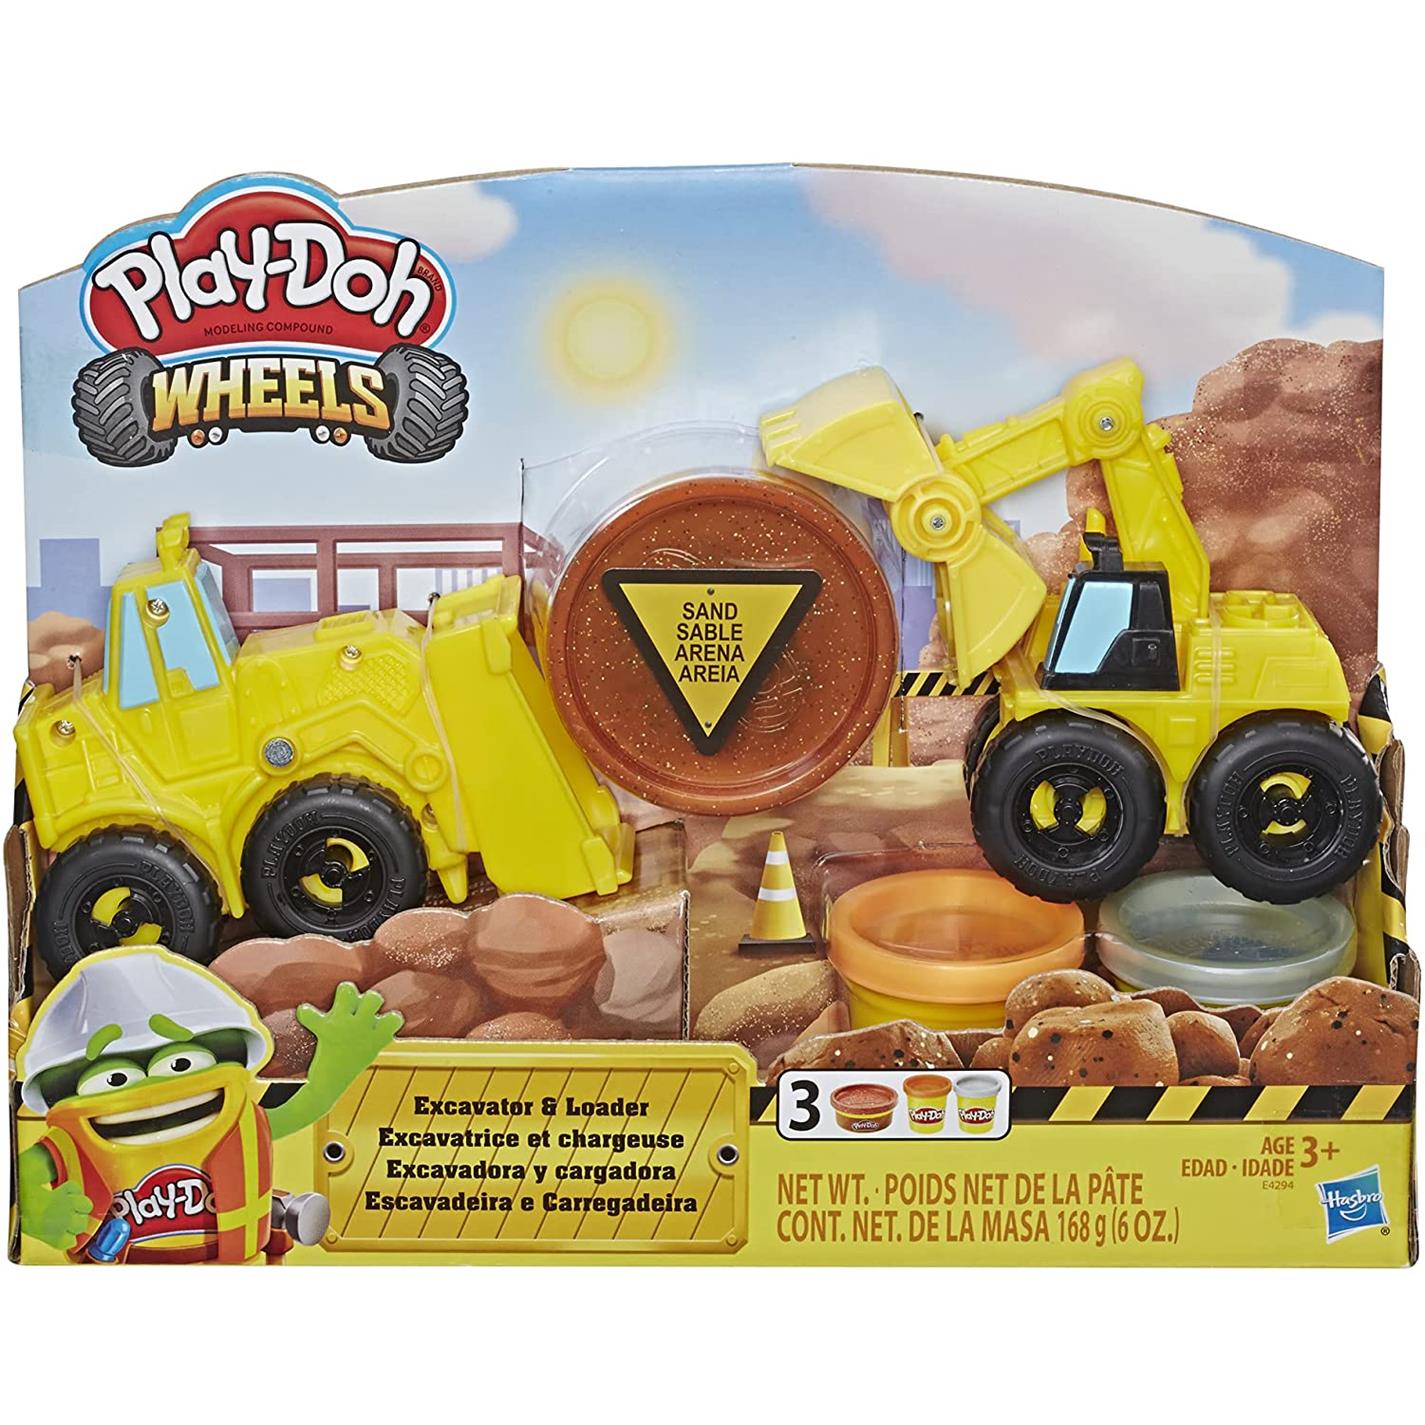 Play-Doh Wheels Excavator